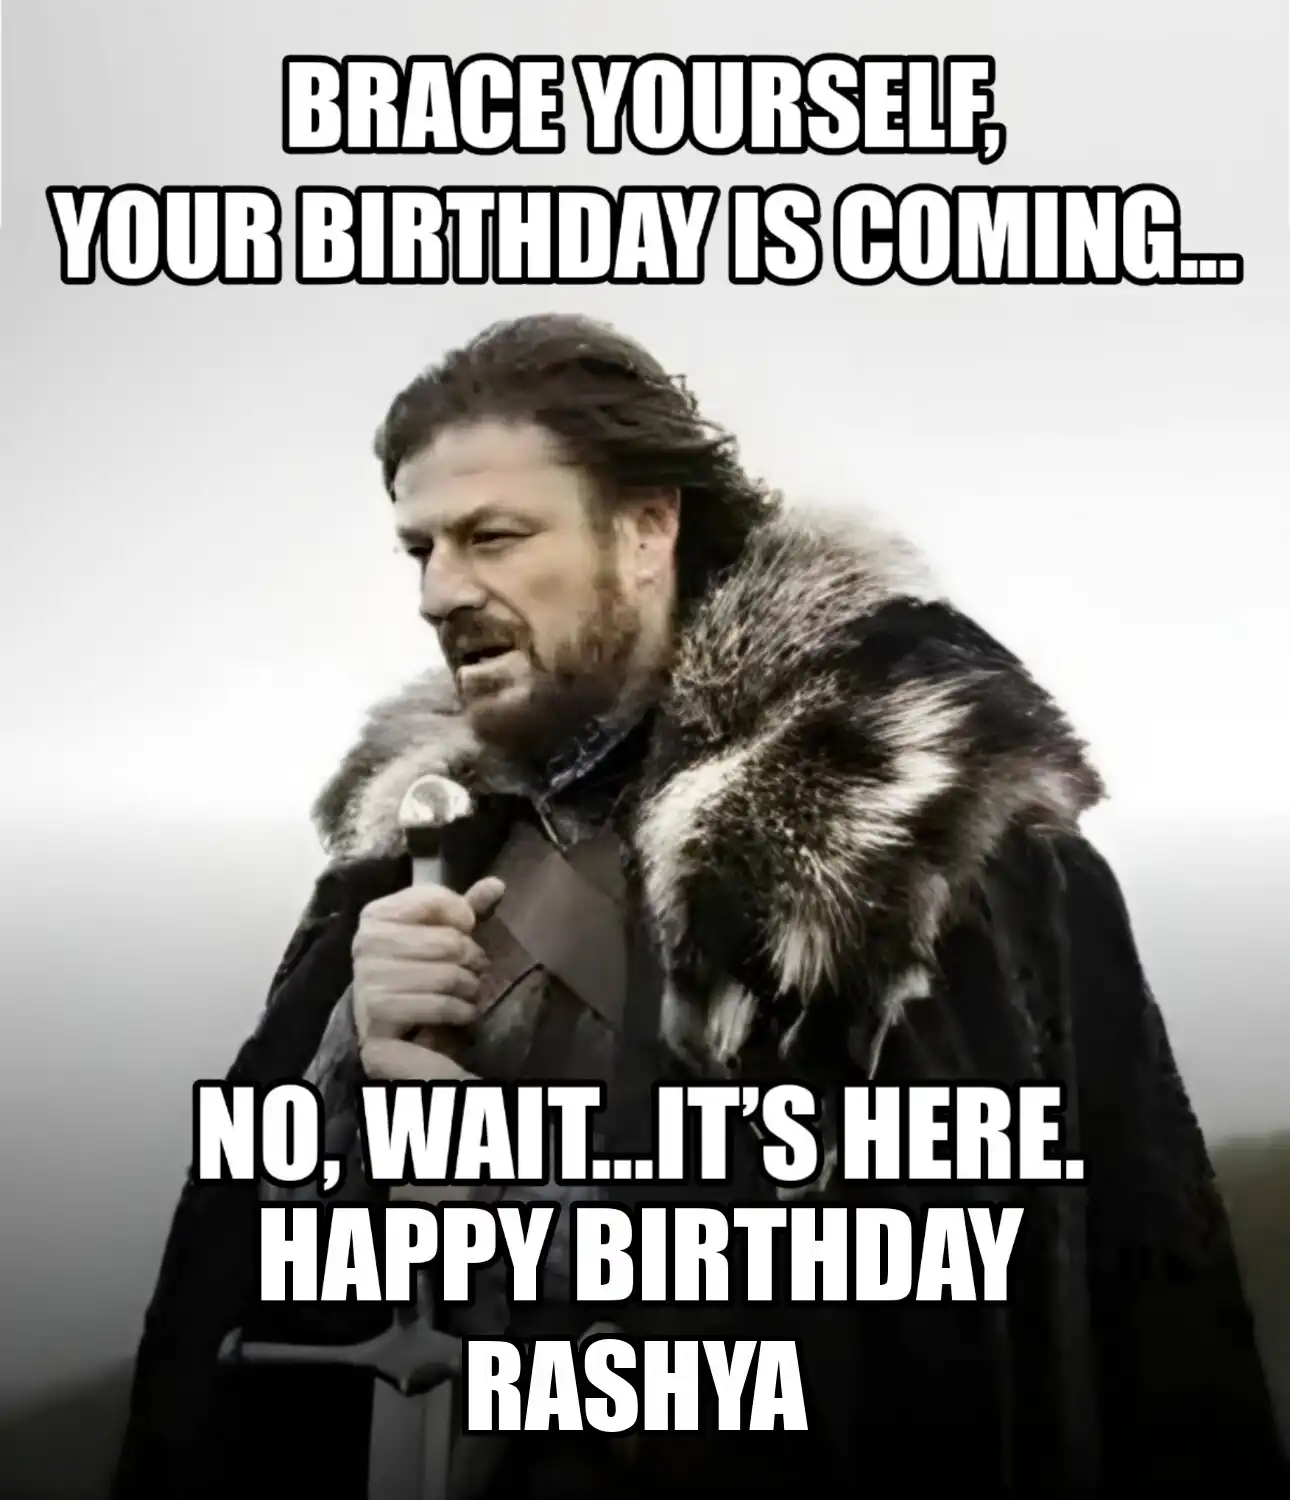 Happy Birthday Rashya Brace Yourself Your Birthday Is Coming Meme